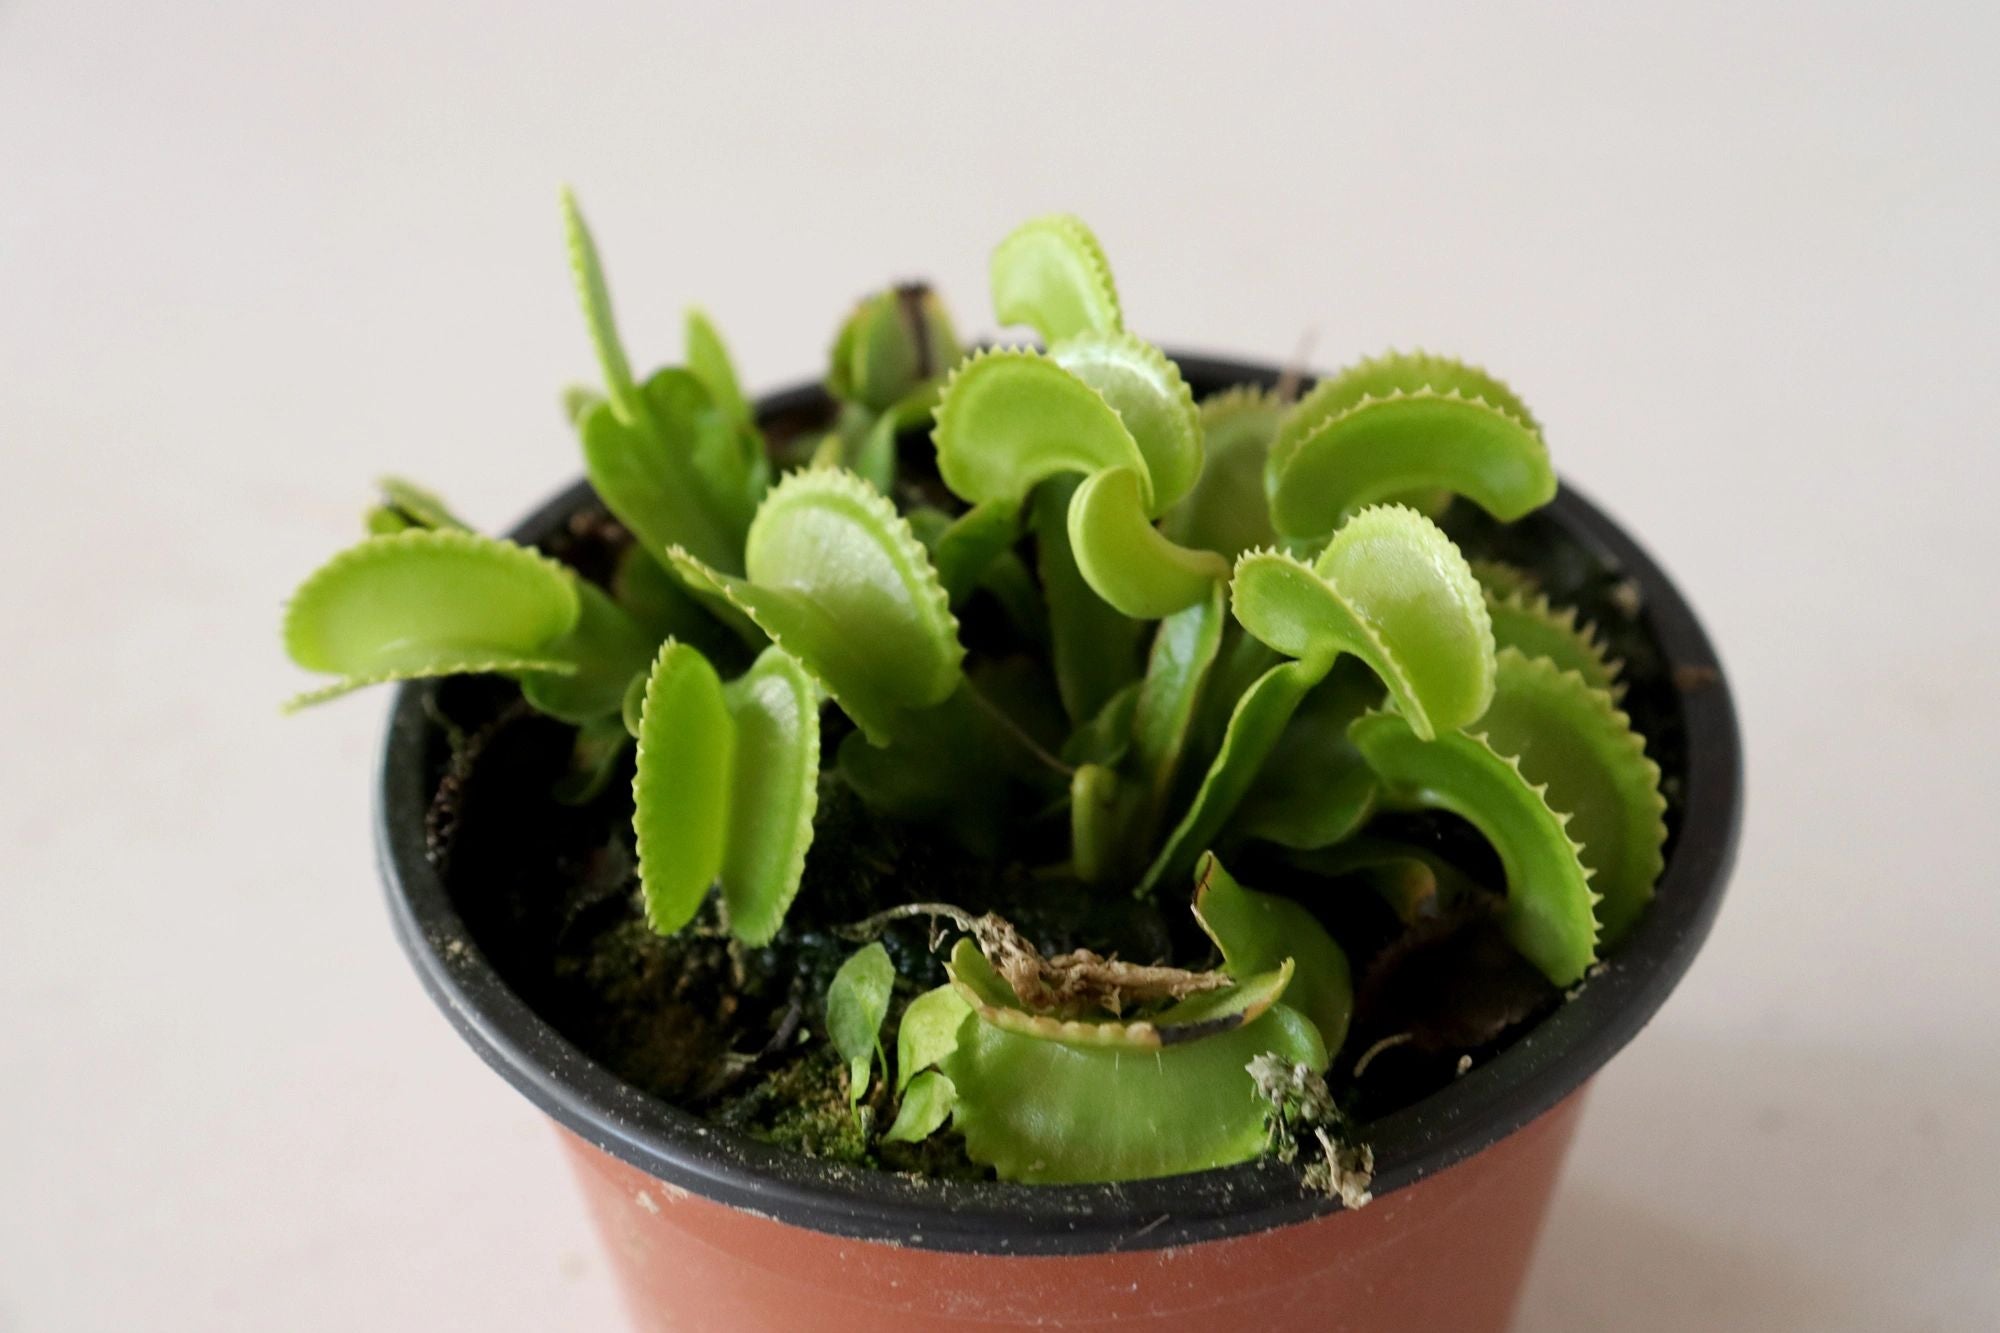 Venus Flytrap (Dionaea muscipula) 'Dente' in Four Inch Plastic Pots